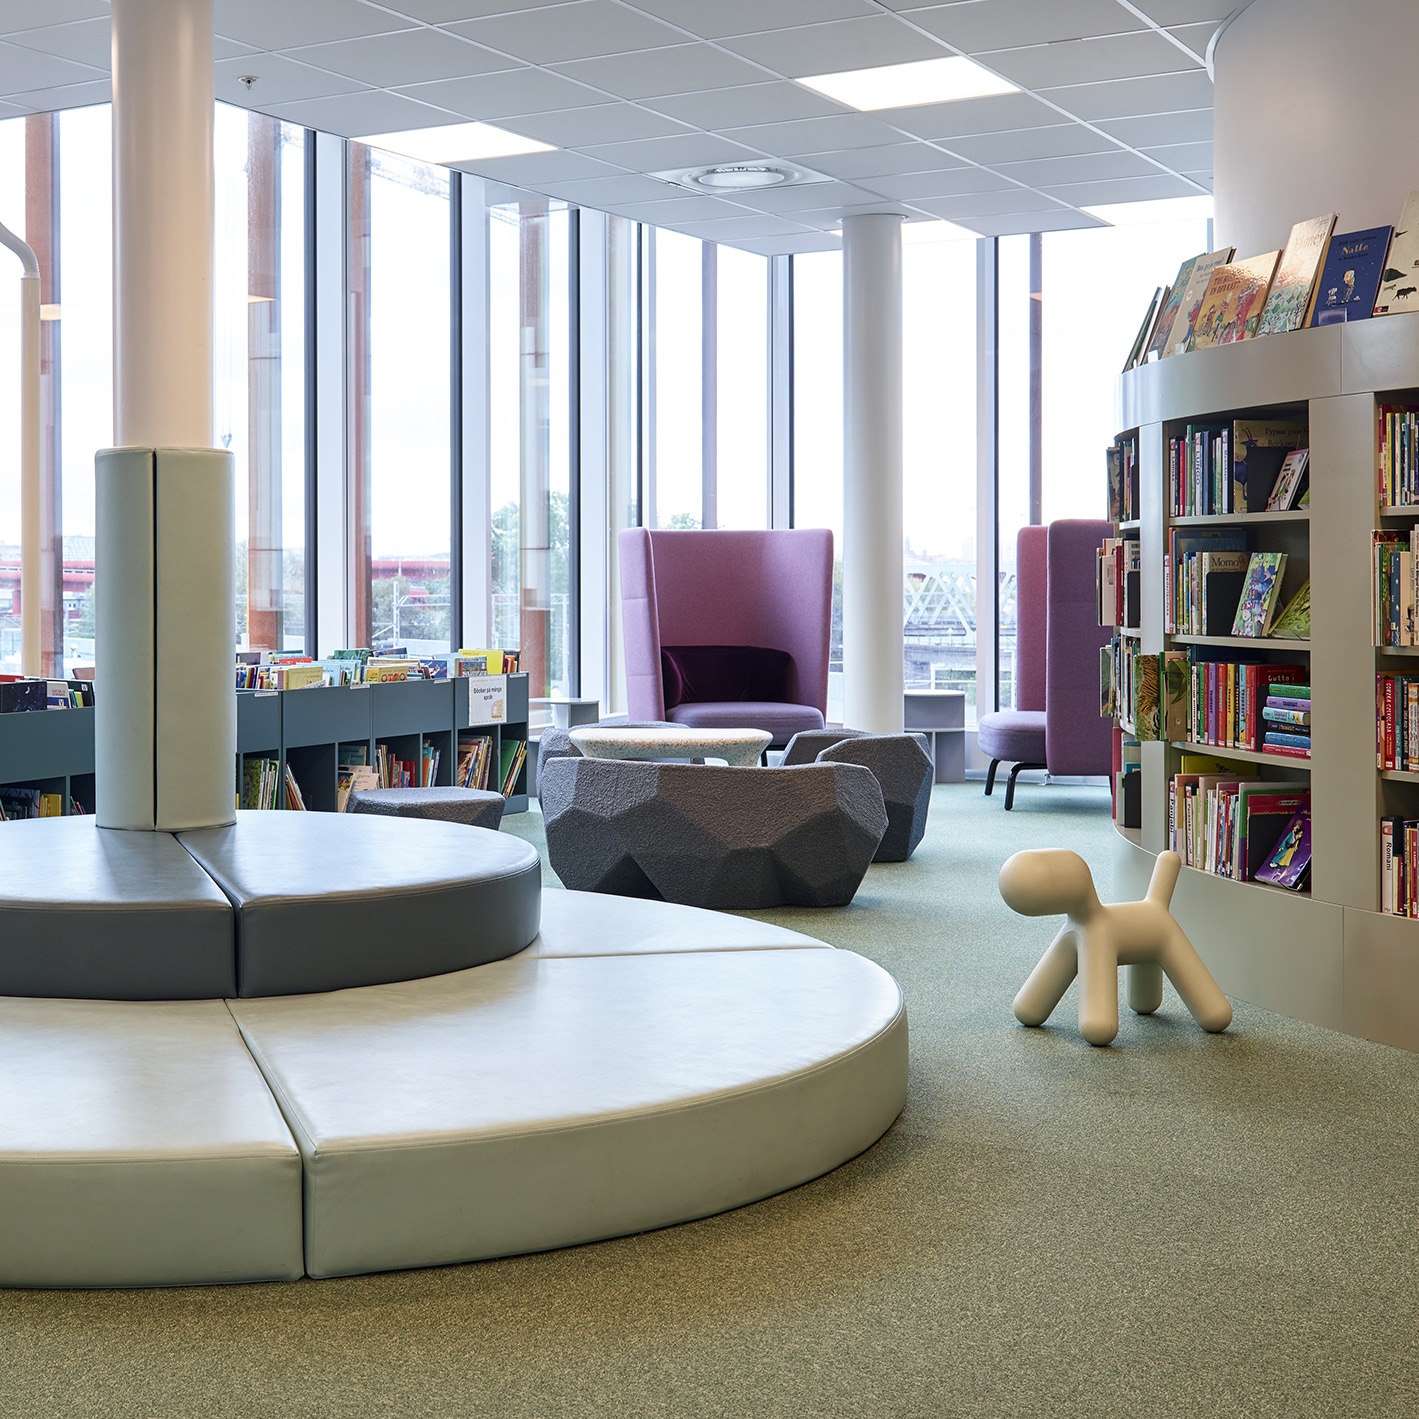 Världslitteraturhuset Library for children and sitting area